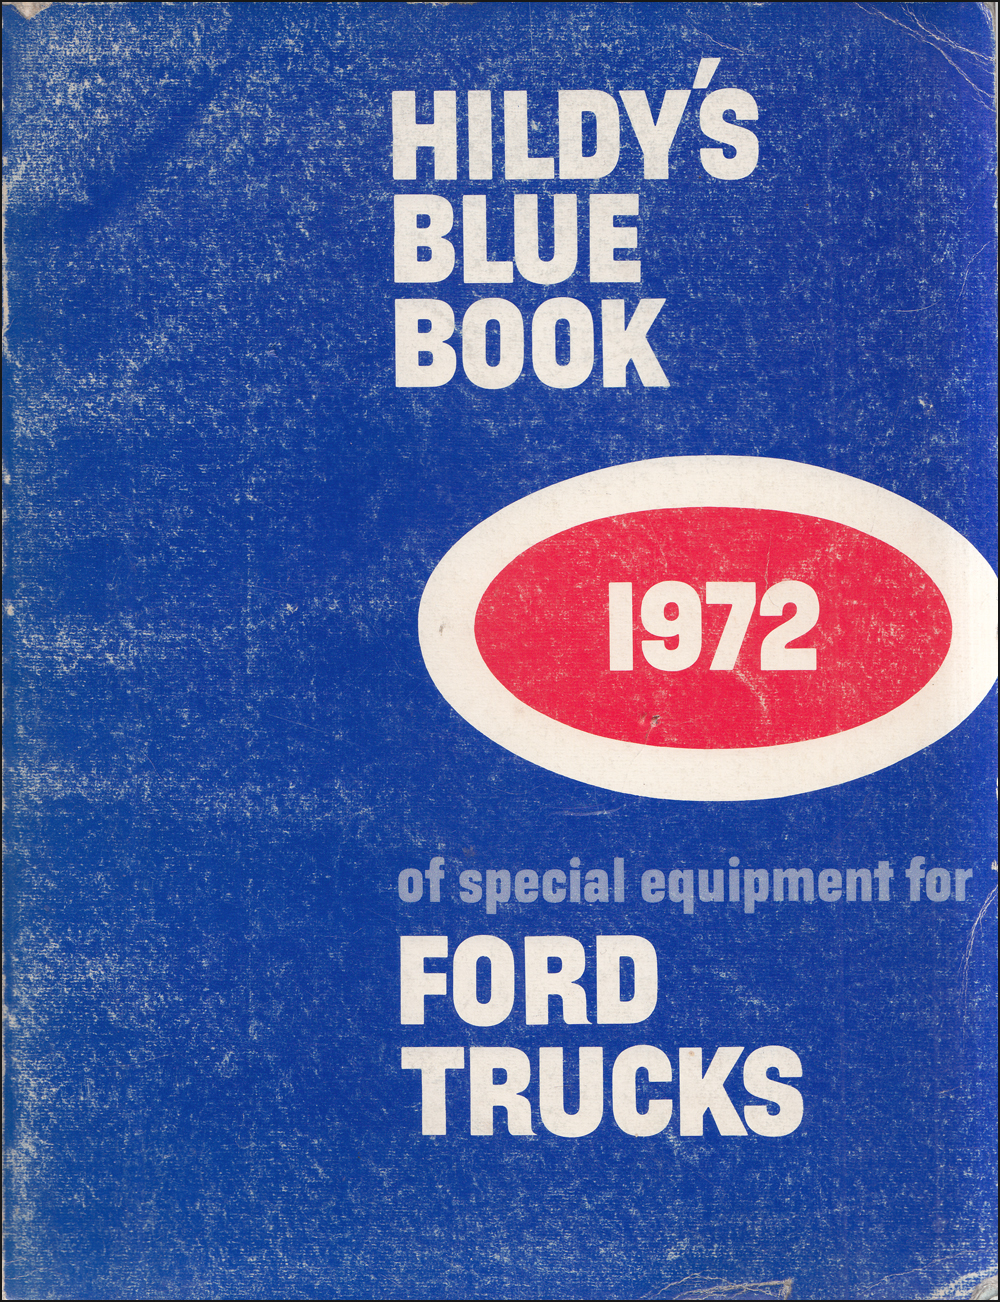 1972 Ford Truck Hildy's Blue Book Special Equipment Dealer Album